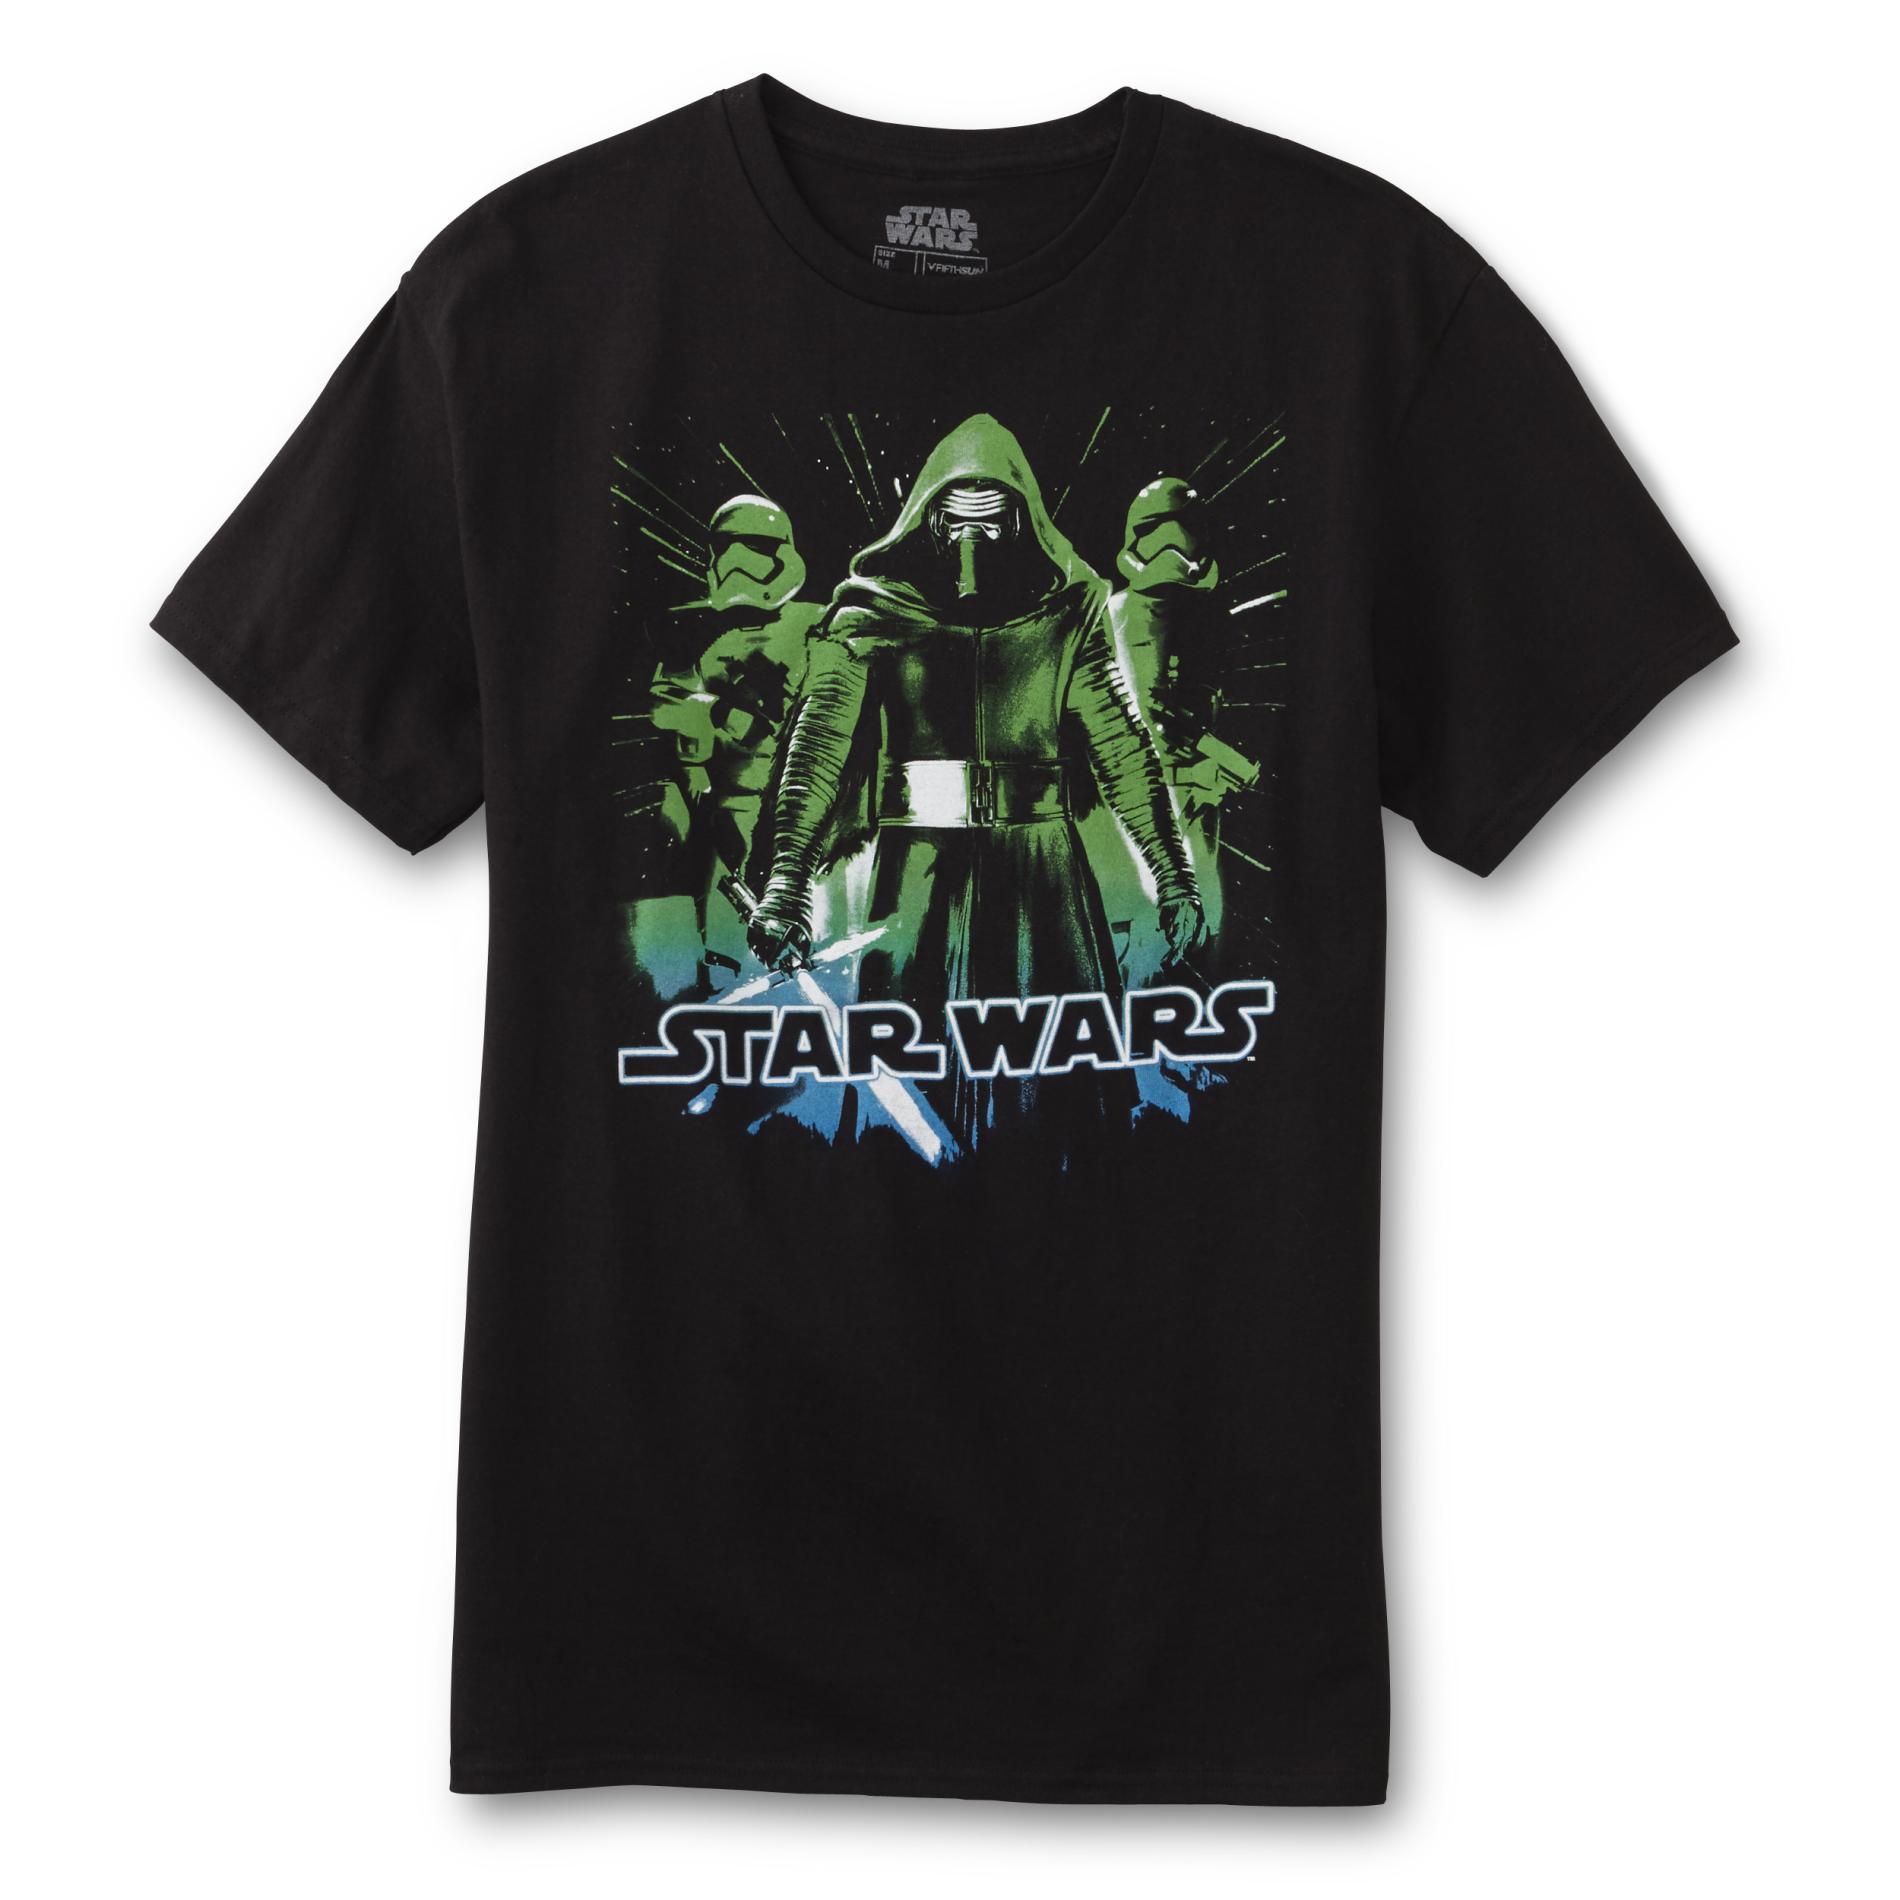 Star Wars Men's Graphic T-Shirt - Kylo Ren